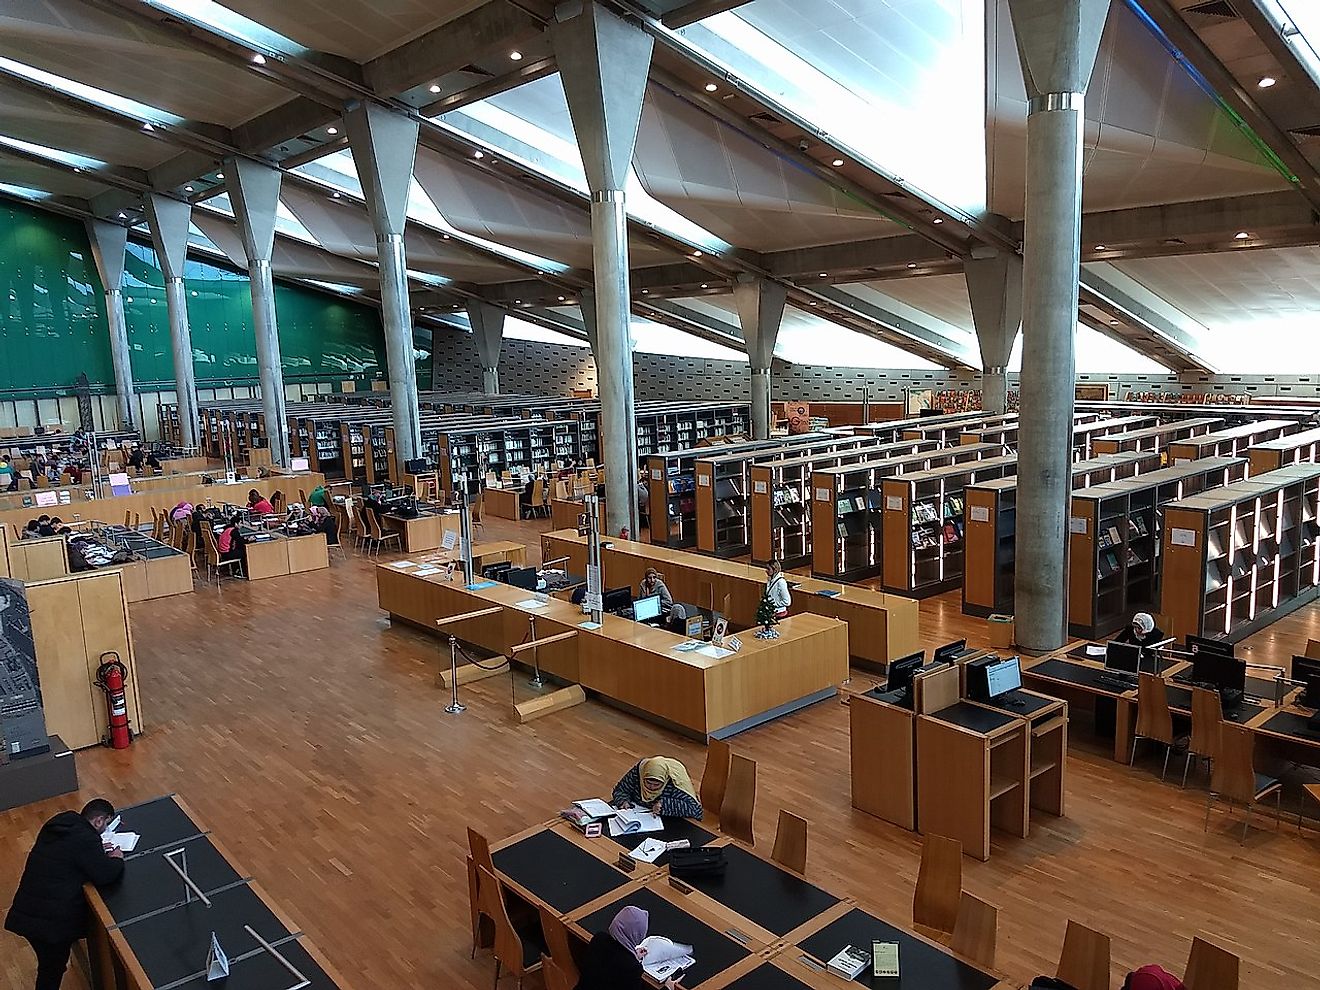 Bibliotheca Alexandrina. Image credit: Cecioka/Wikimedia.org